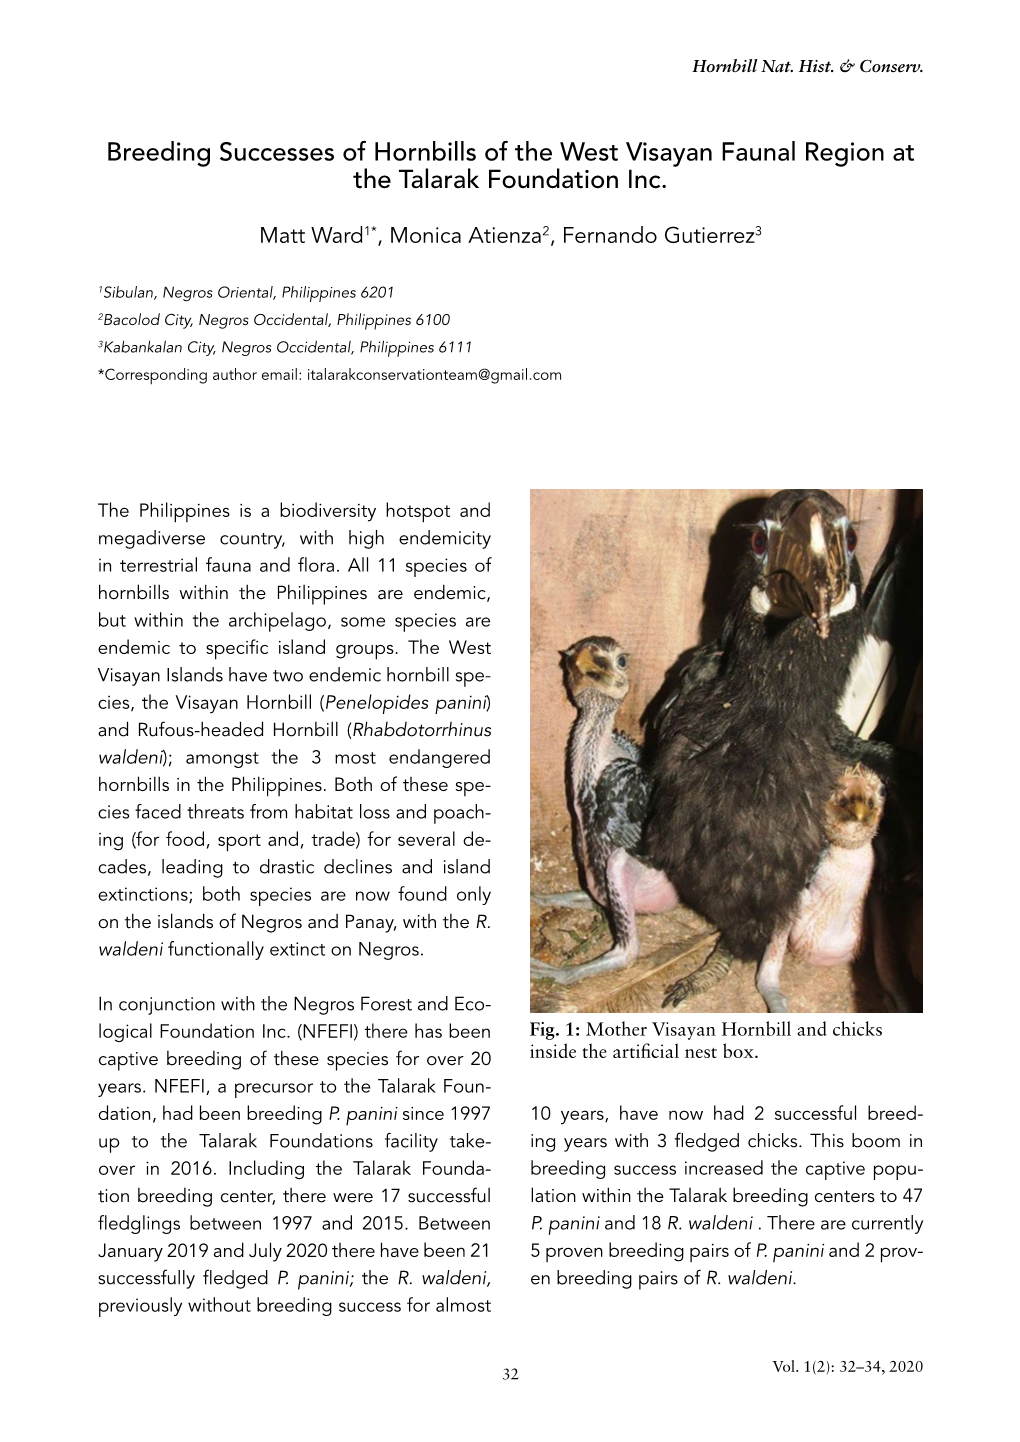 Breeding Successes of Hornbills of the West Visayan Faunal Region at the Talarak Foundation Inc